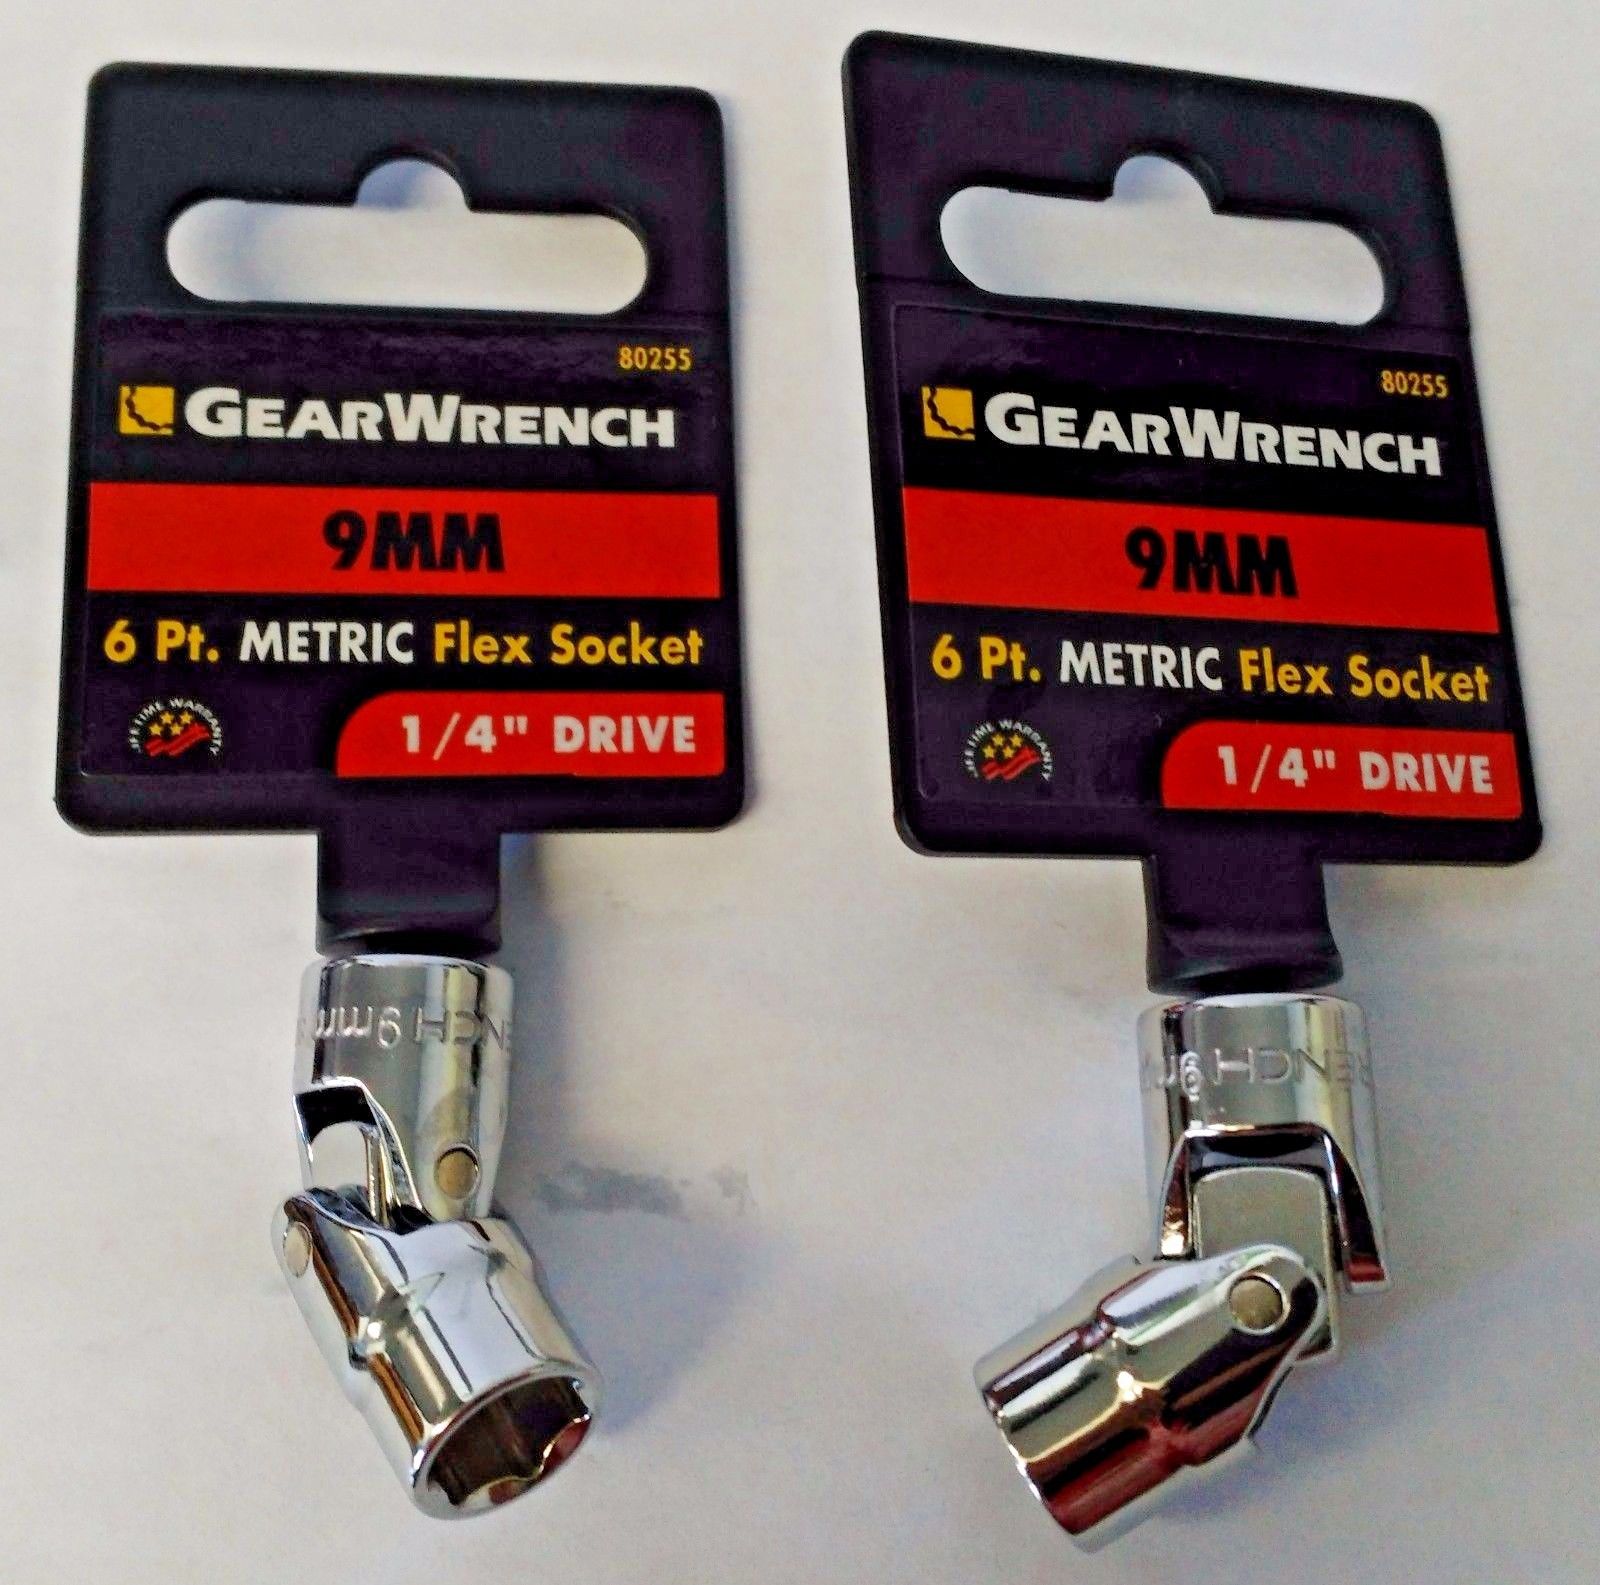 Gearwrench 80255 1/4" Drive 6 Point Flex Socket 9mm 2PCS